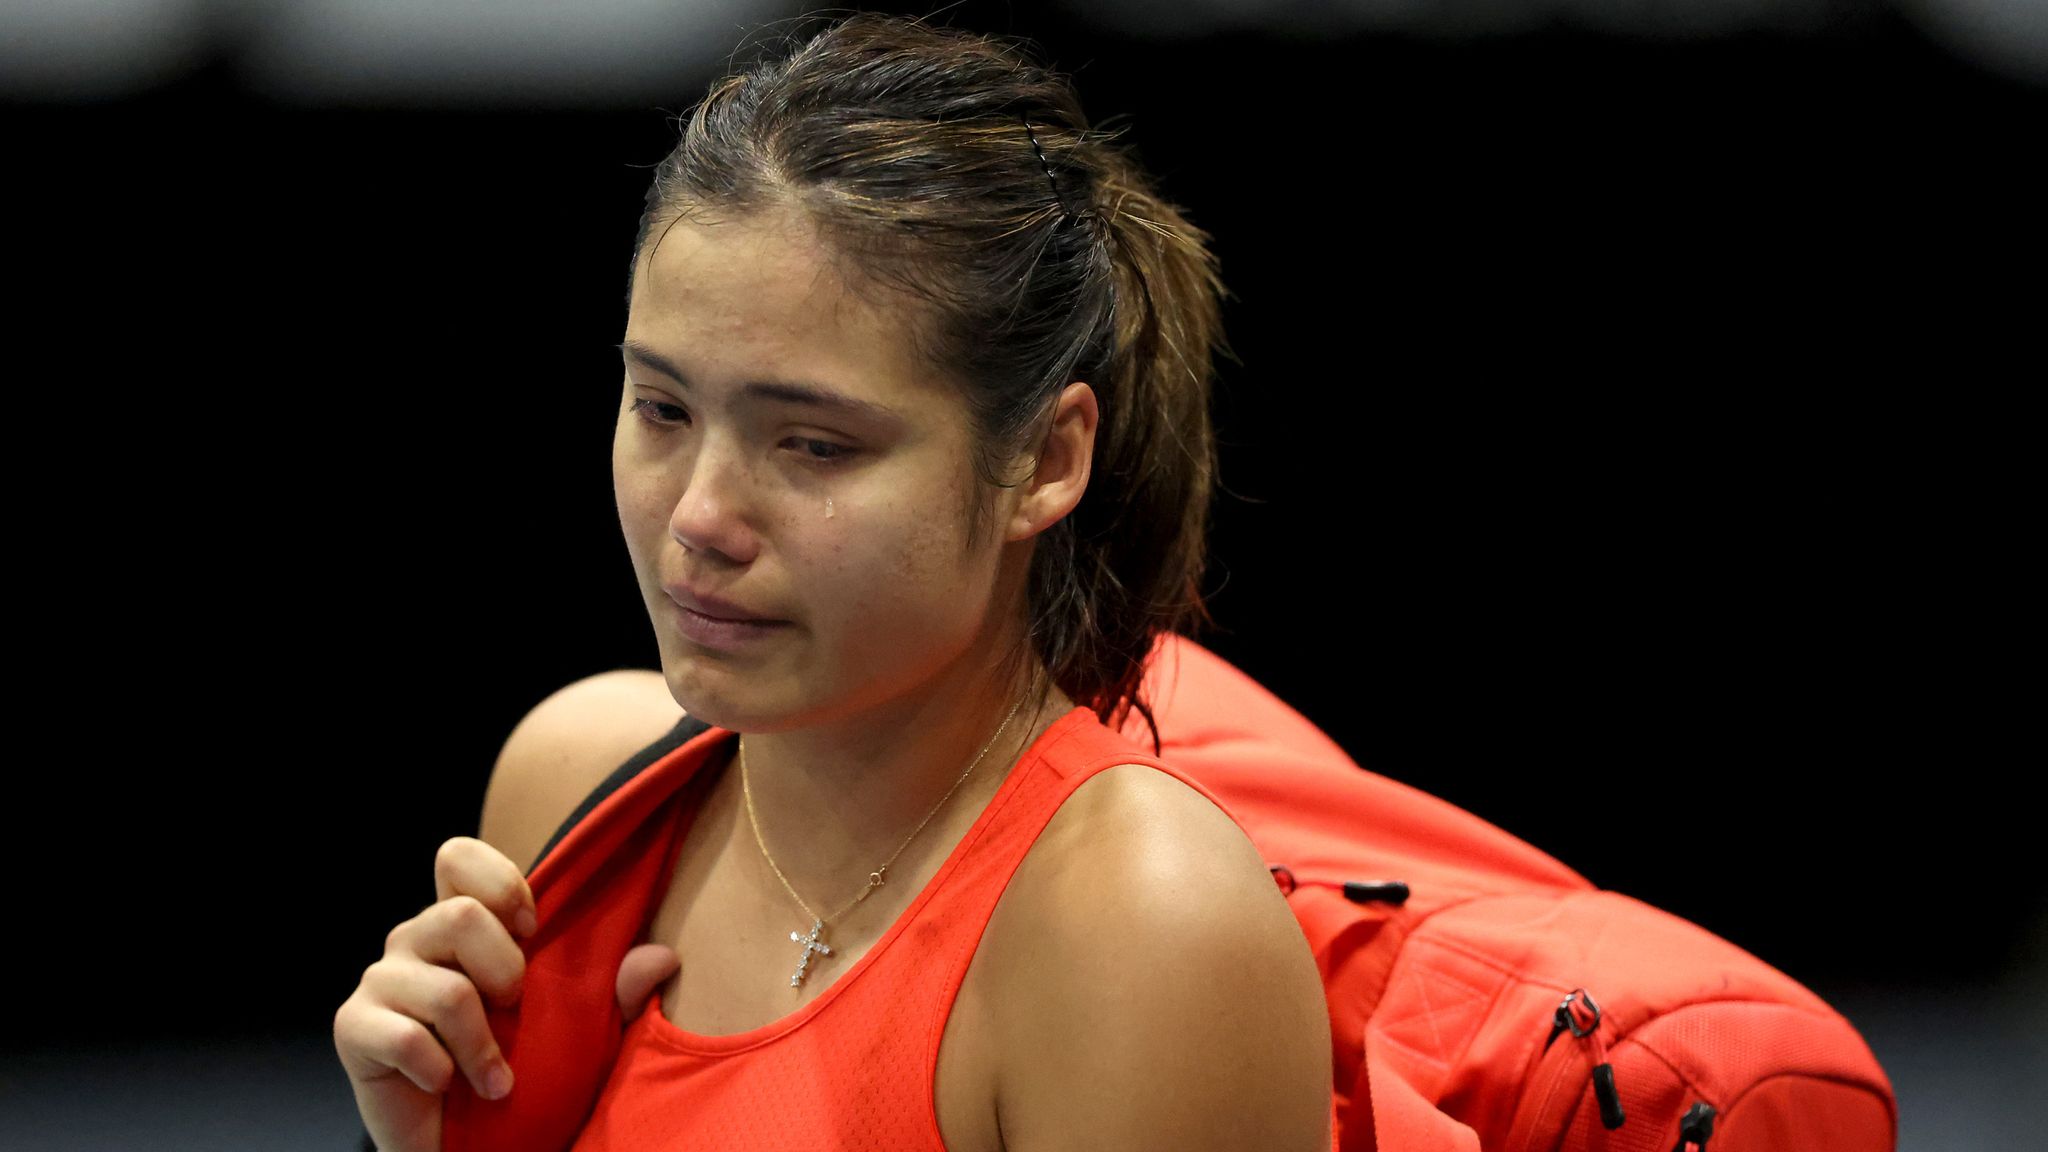 Emma Raducanu suffers ankle injury ahead of Australian Open and retires